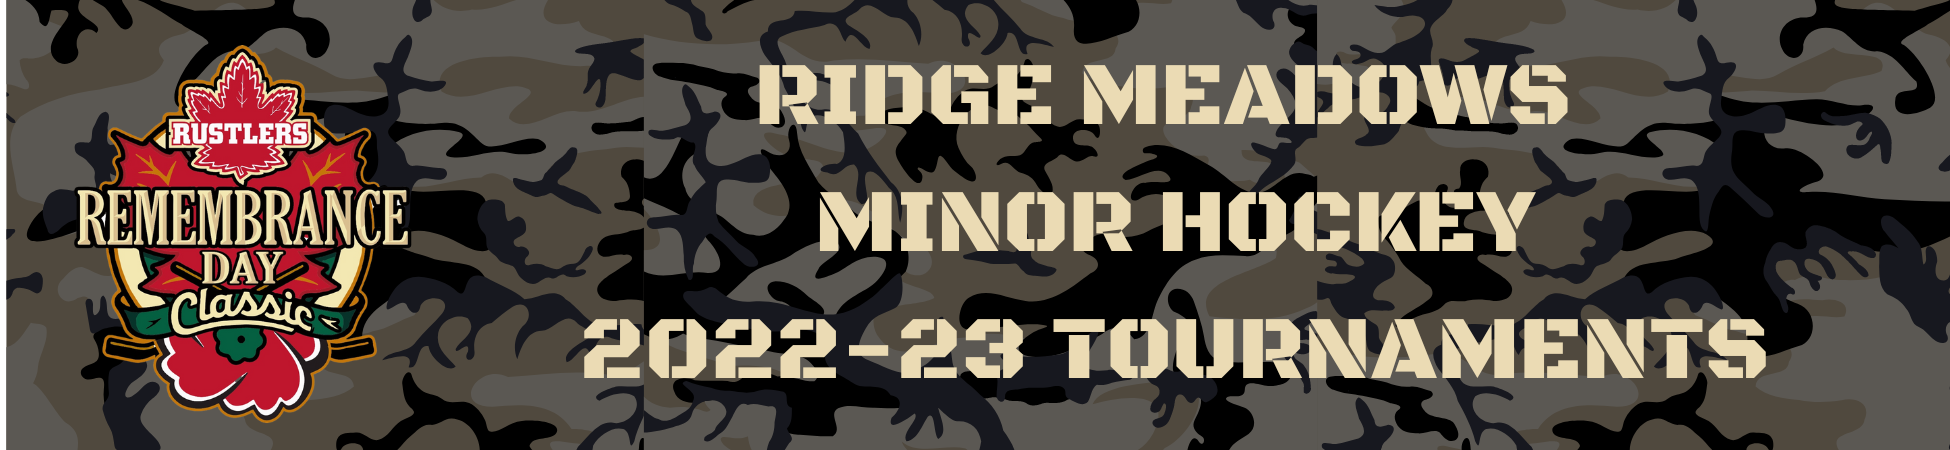 RIDGE MEADOWS MINOR HOCKEY 2022-23 TOURNAMENTS (1)